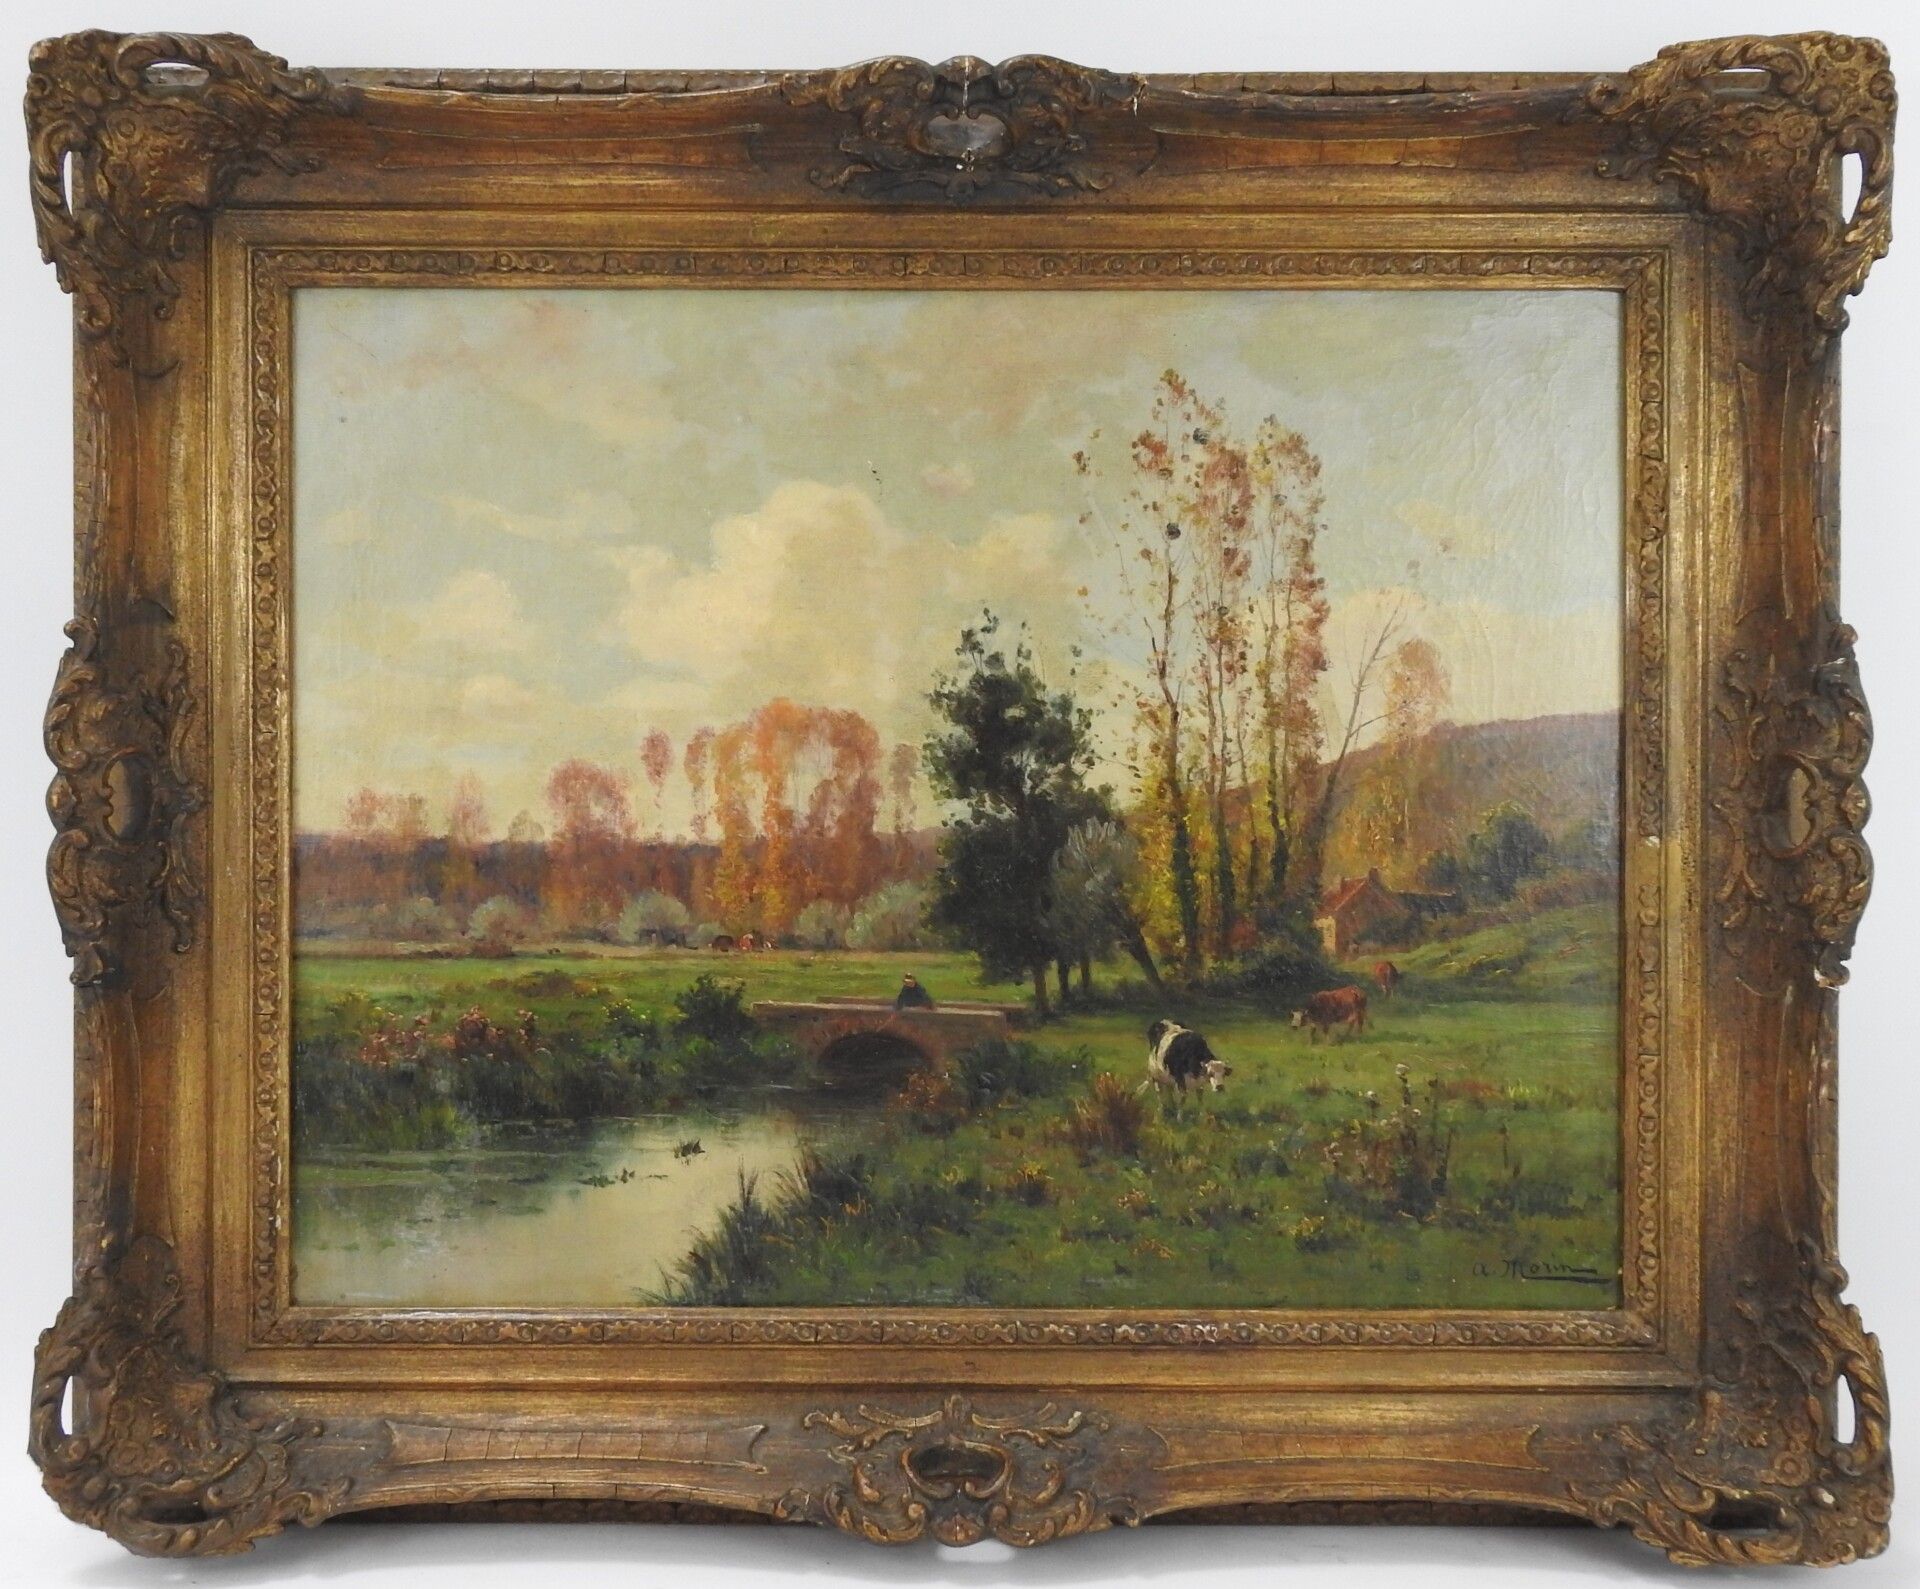 Null A.莫林（第十九次）。有渔民和牛的风景。布面油画。右下方有签名。51 x 65 cm。装框。